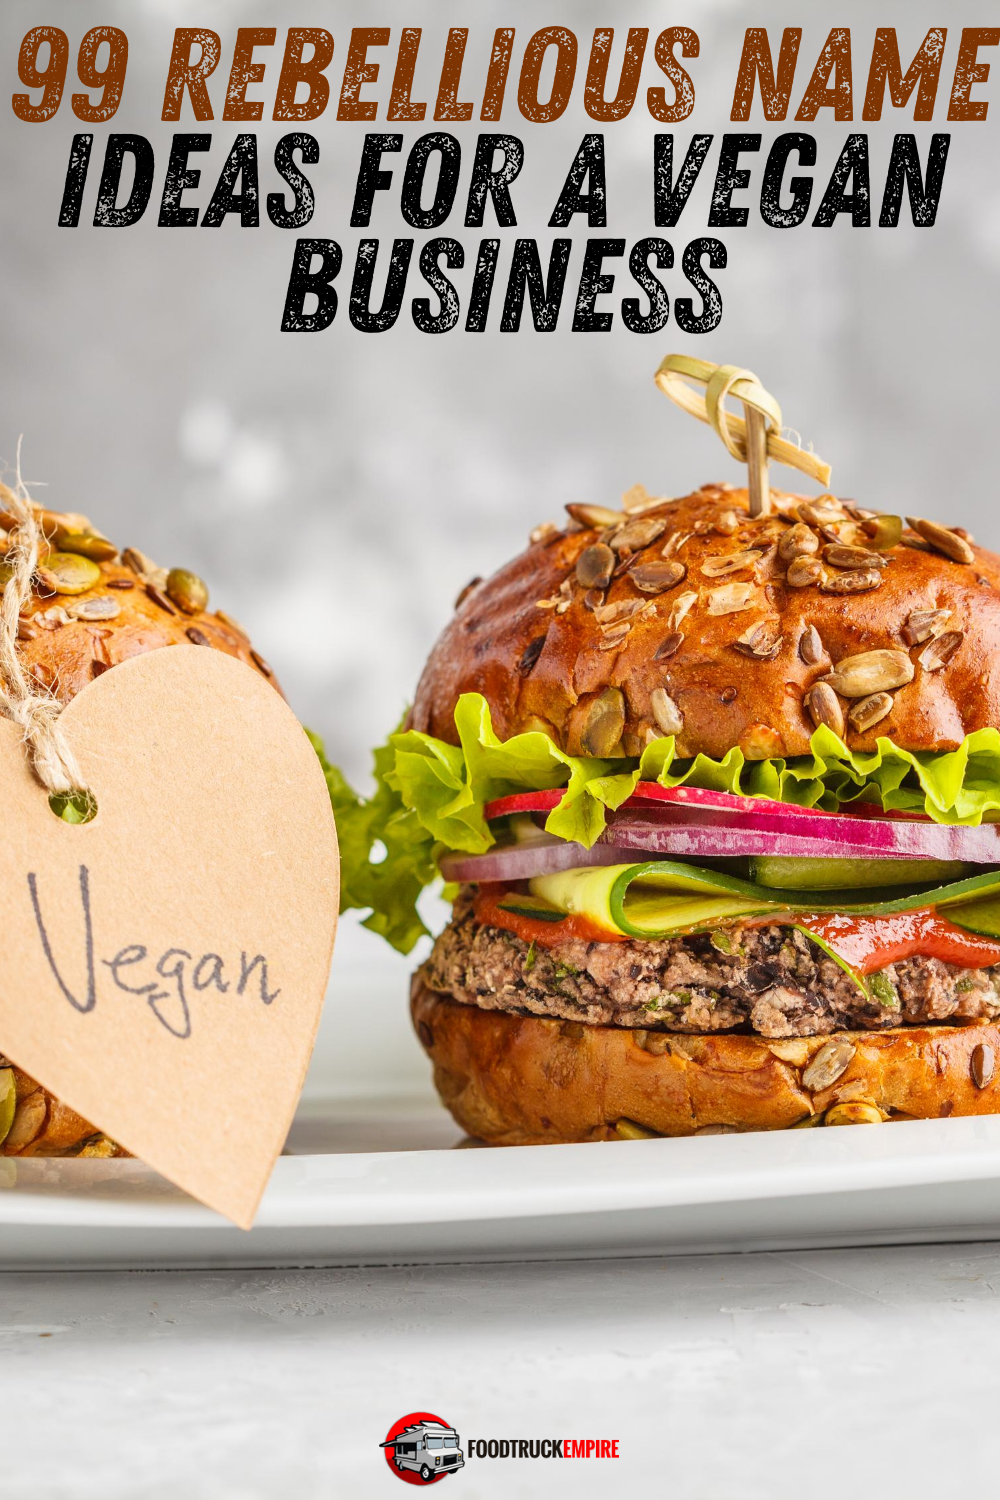 99 Rebellious Name Ideas for a Vegan Business